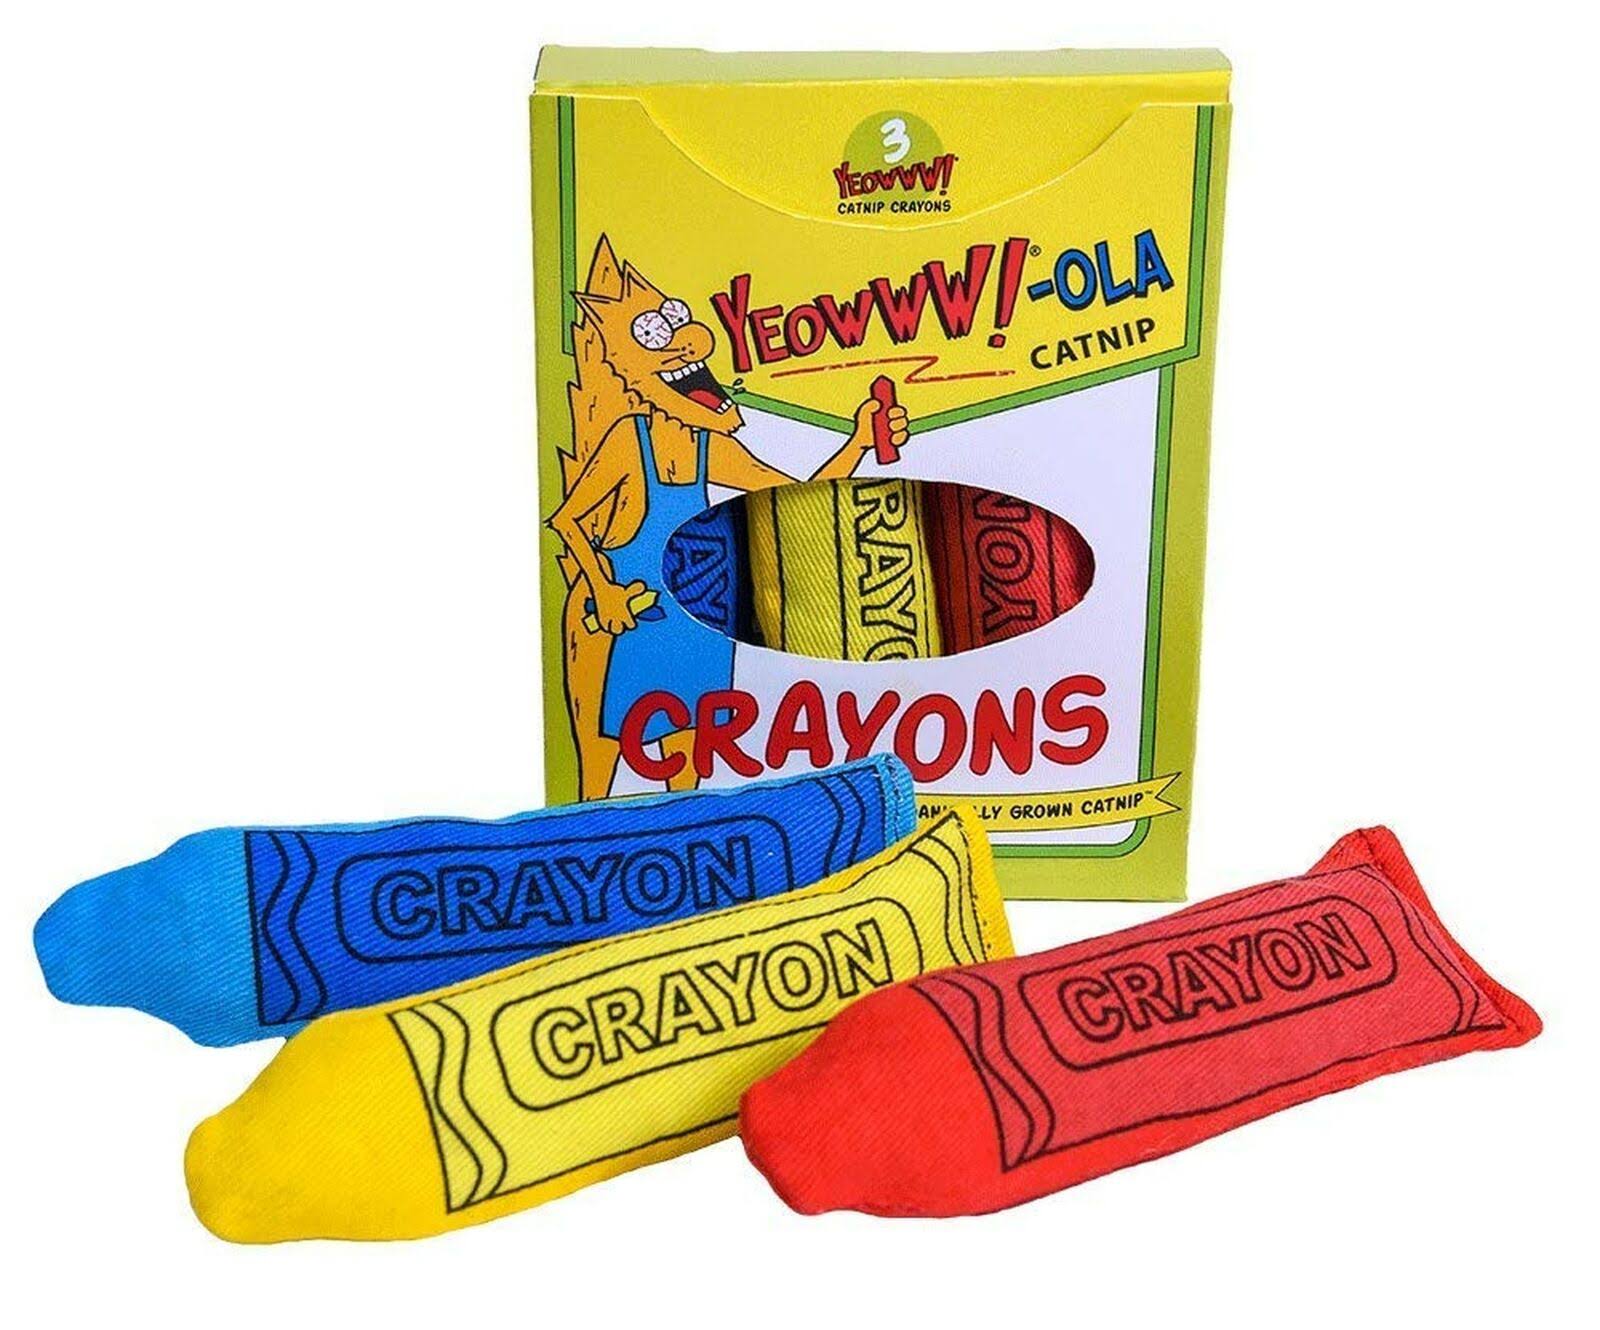 Yeowww! Crayons Catnip Cat Toy